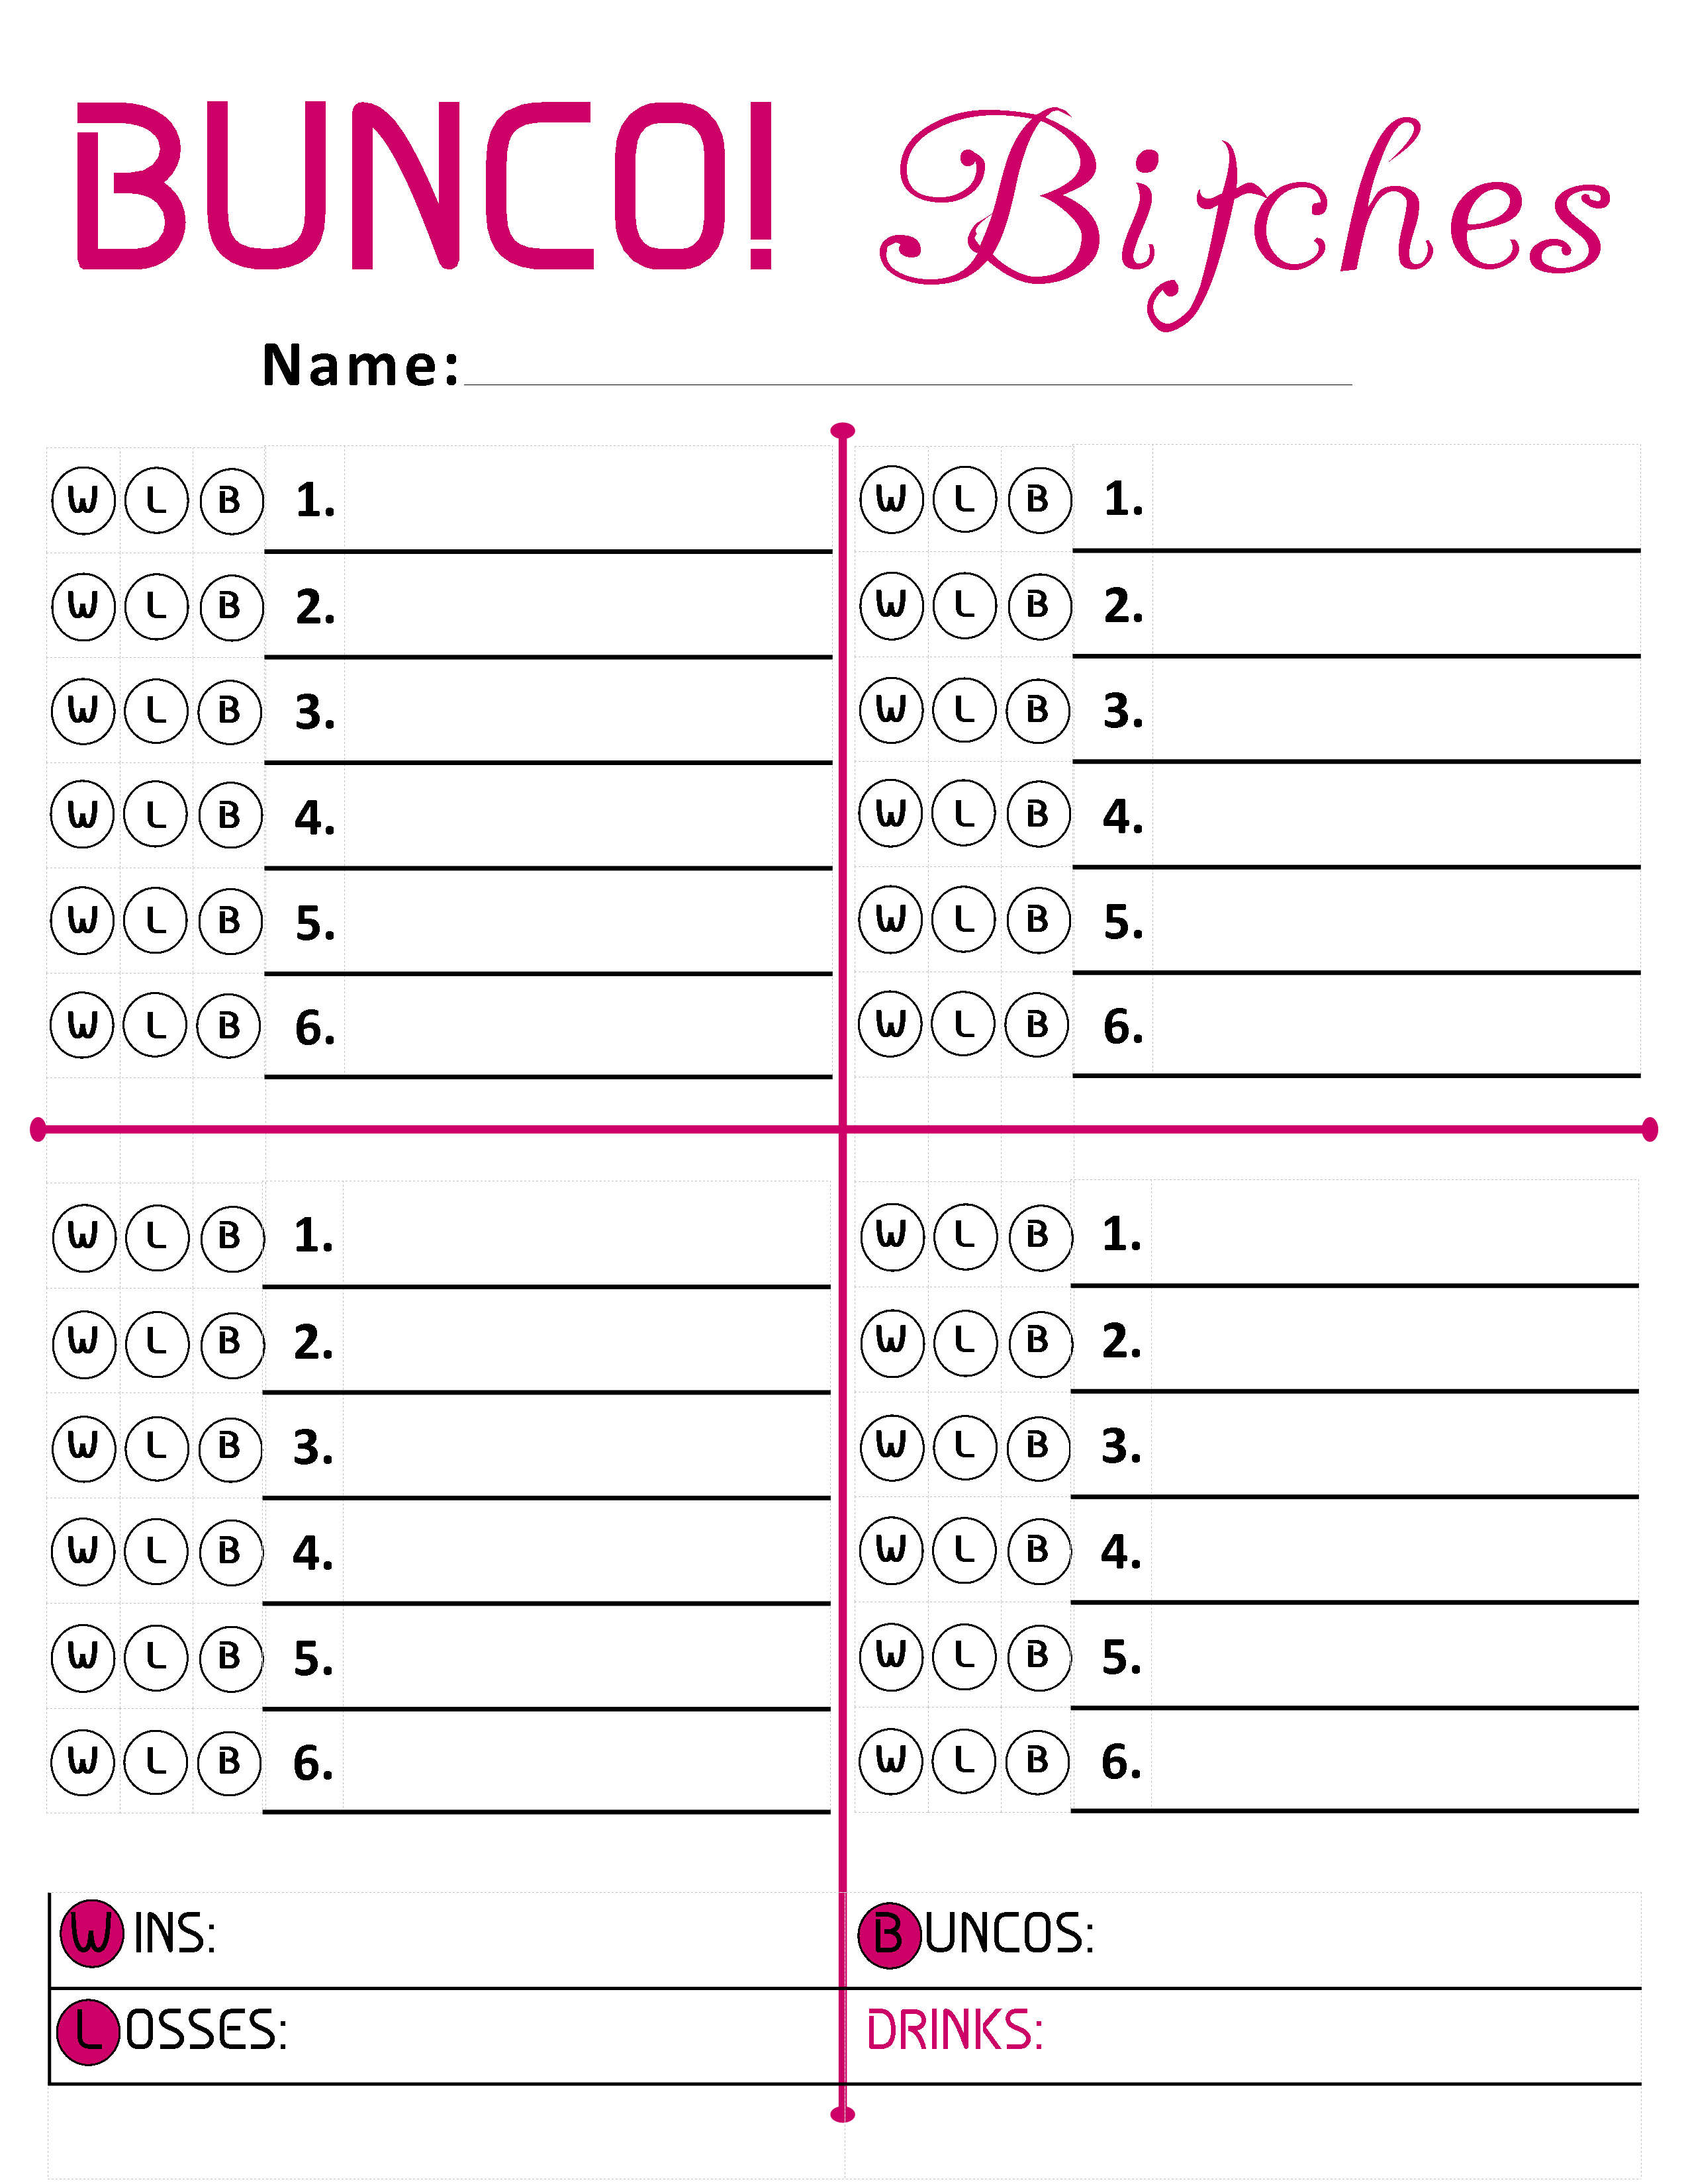 Pinangelica Murdock-Maraj On Bunco Night | Bunco Score Sheets - Free Printable Bunco Game Sheets